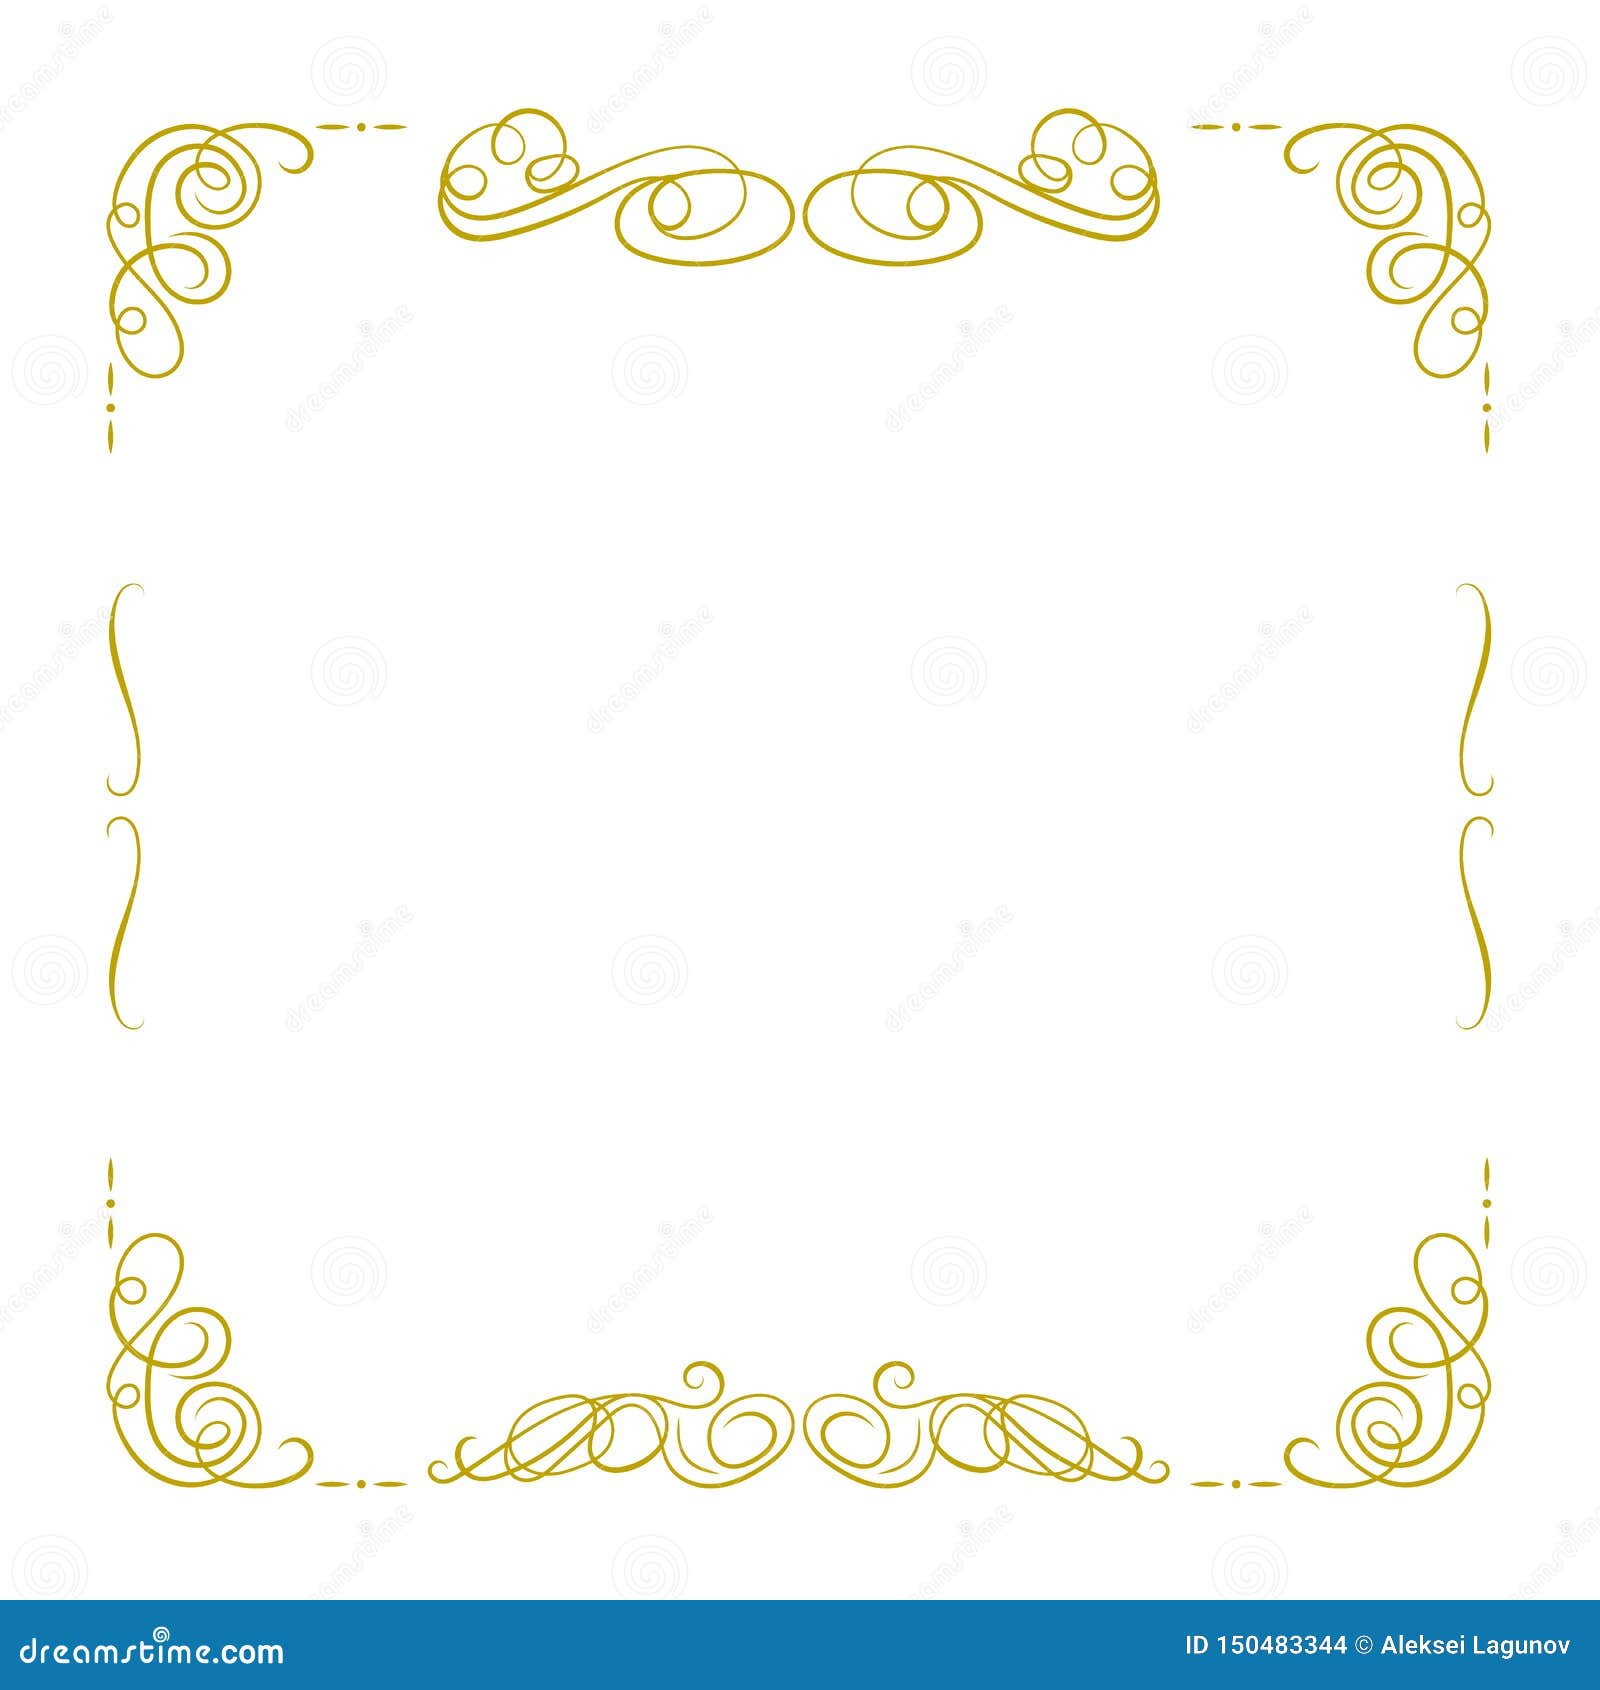 Download Vector Golden Calligraphic Frame, Filigree Square Border ...